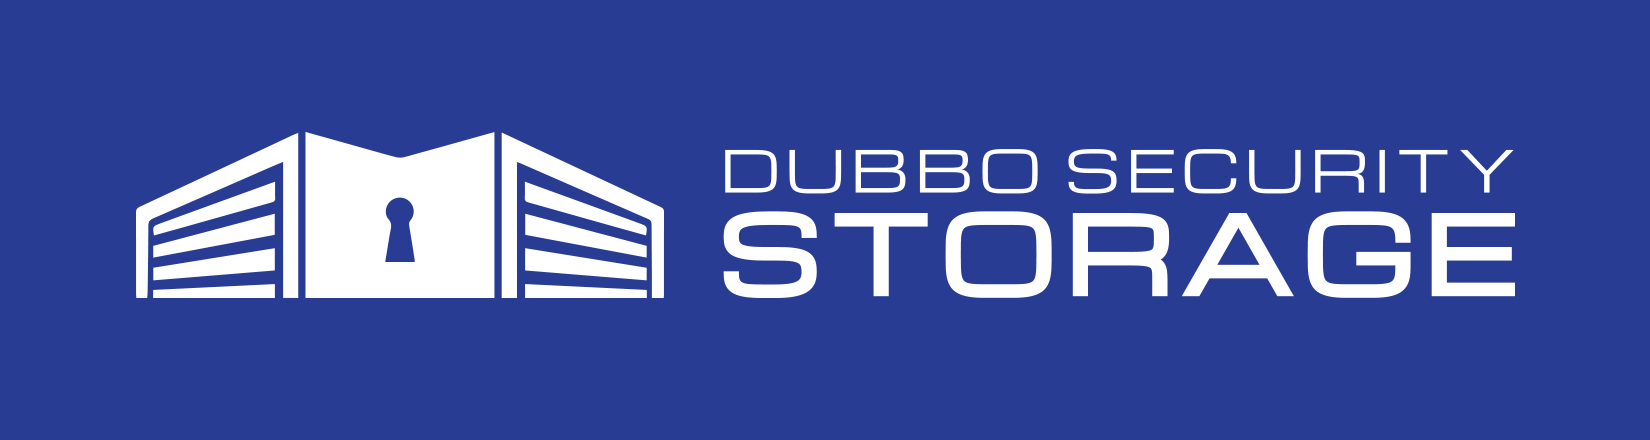 Dubbo Security Storage Logo